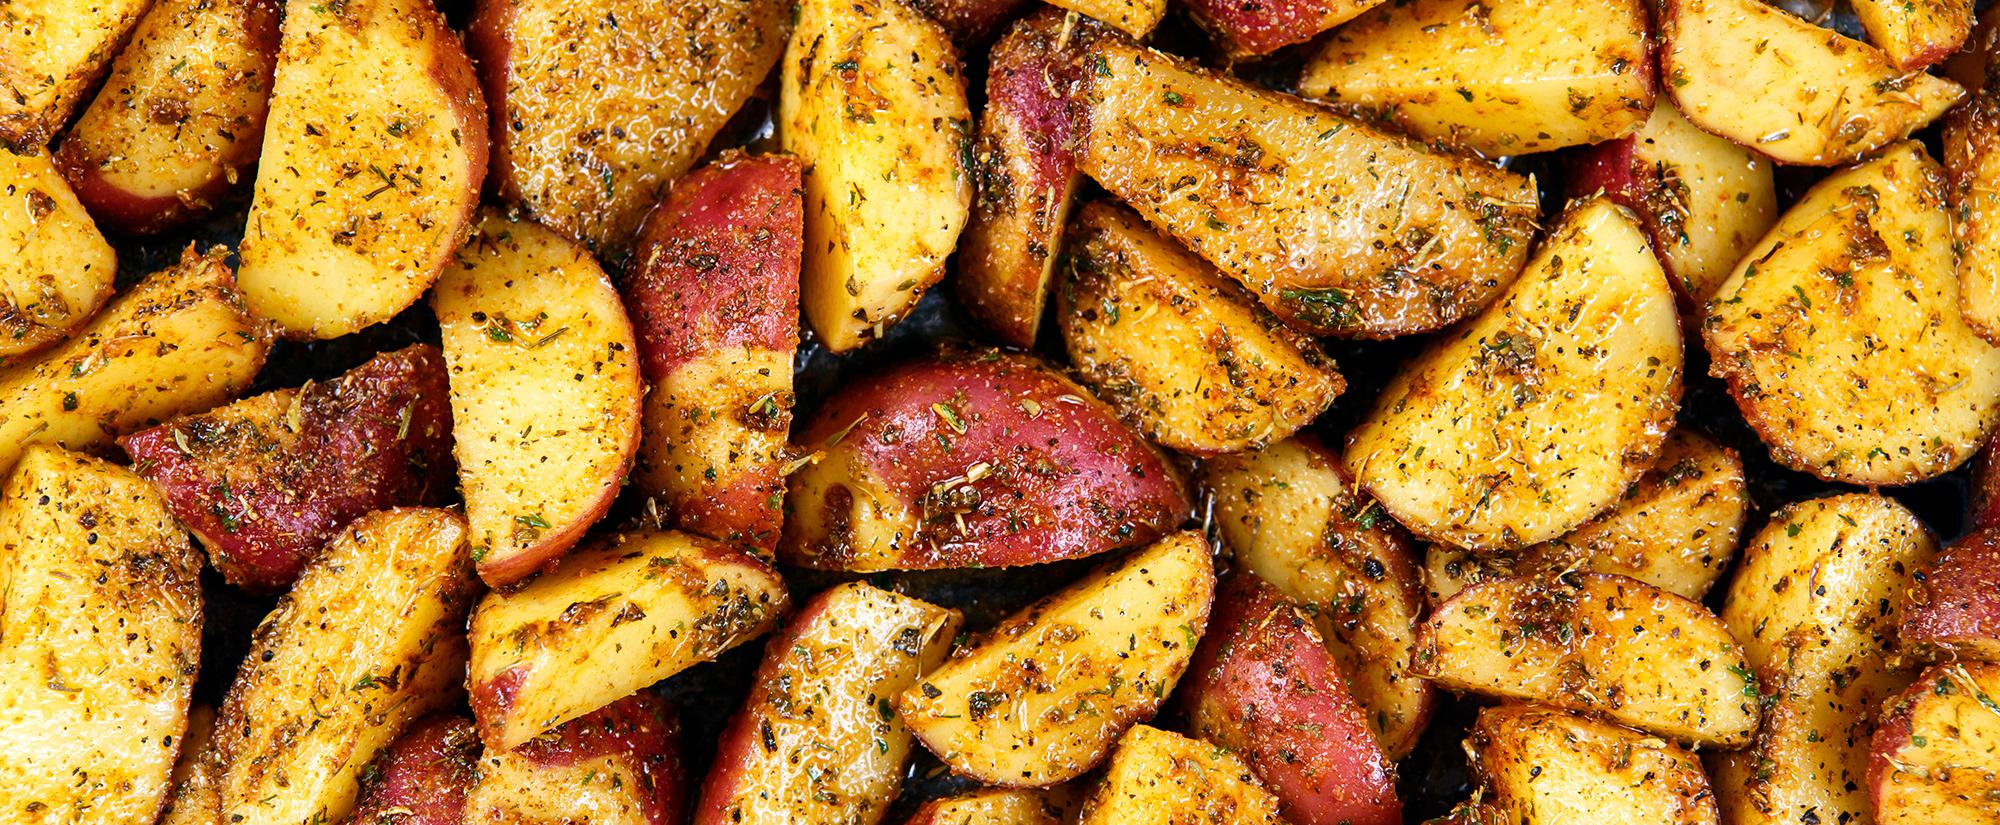 grill potatoes